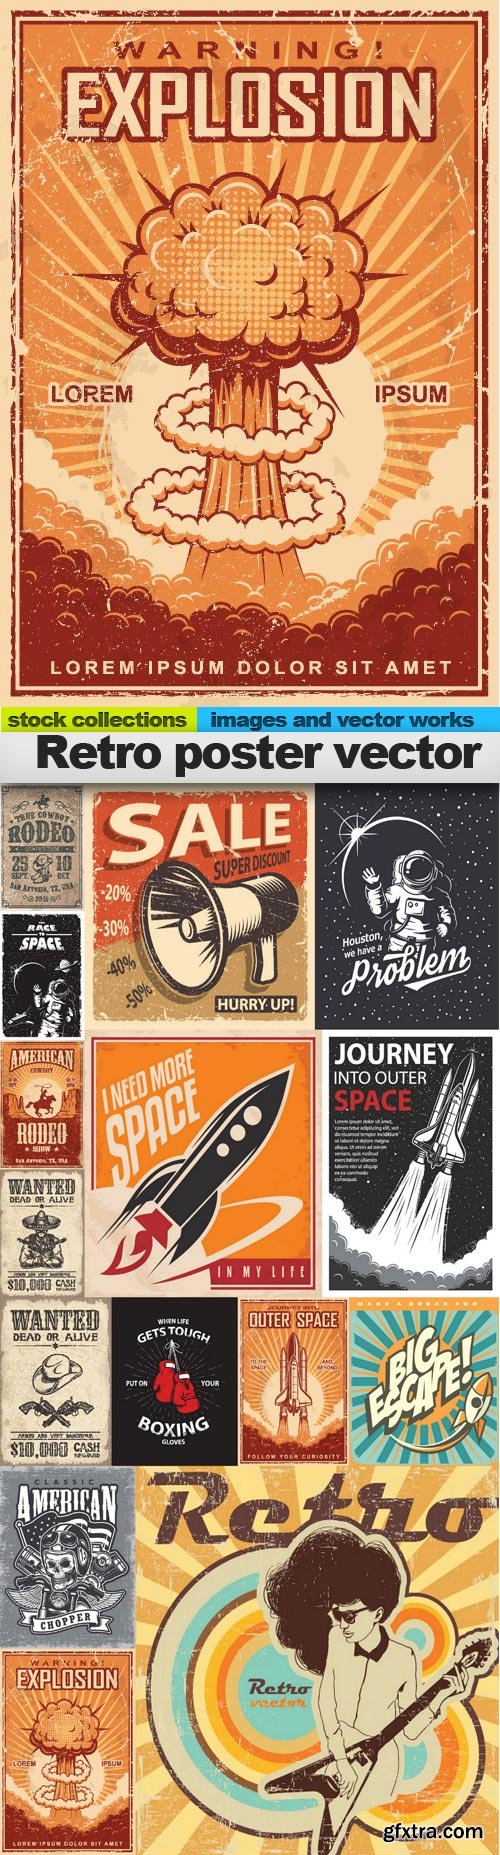 Retro poster vector, 15 x EPS